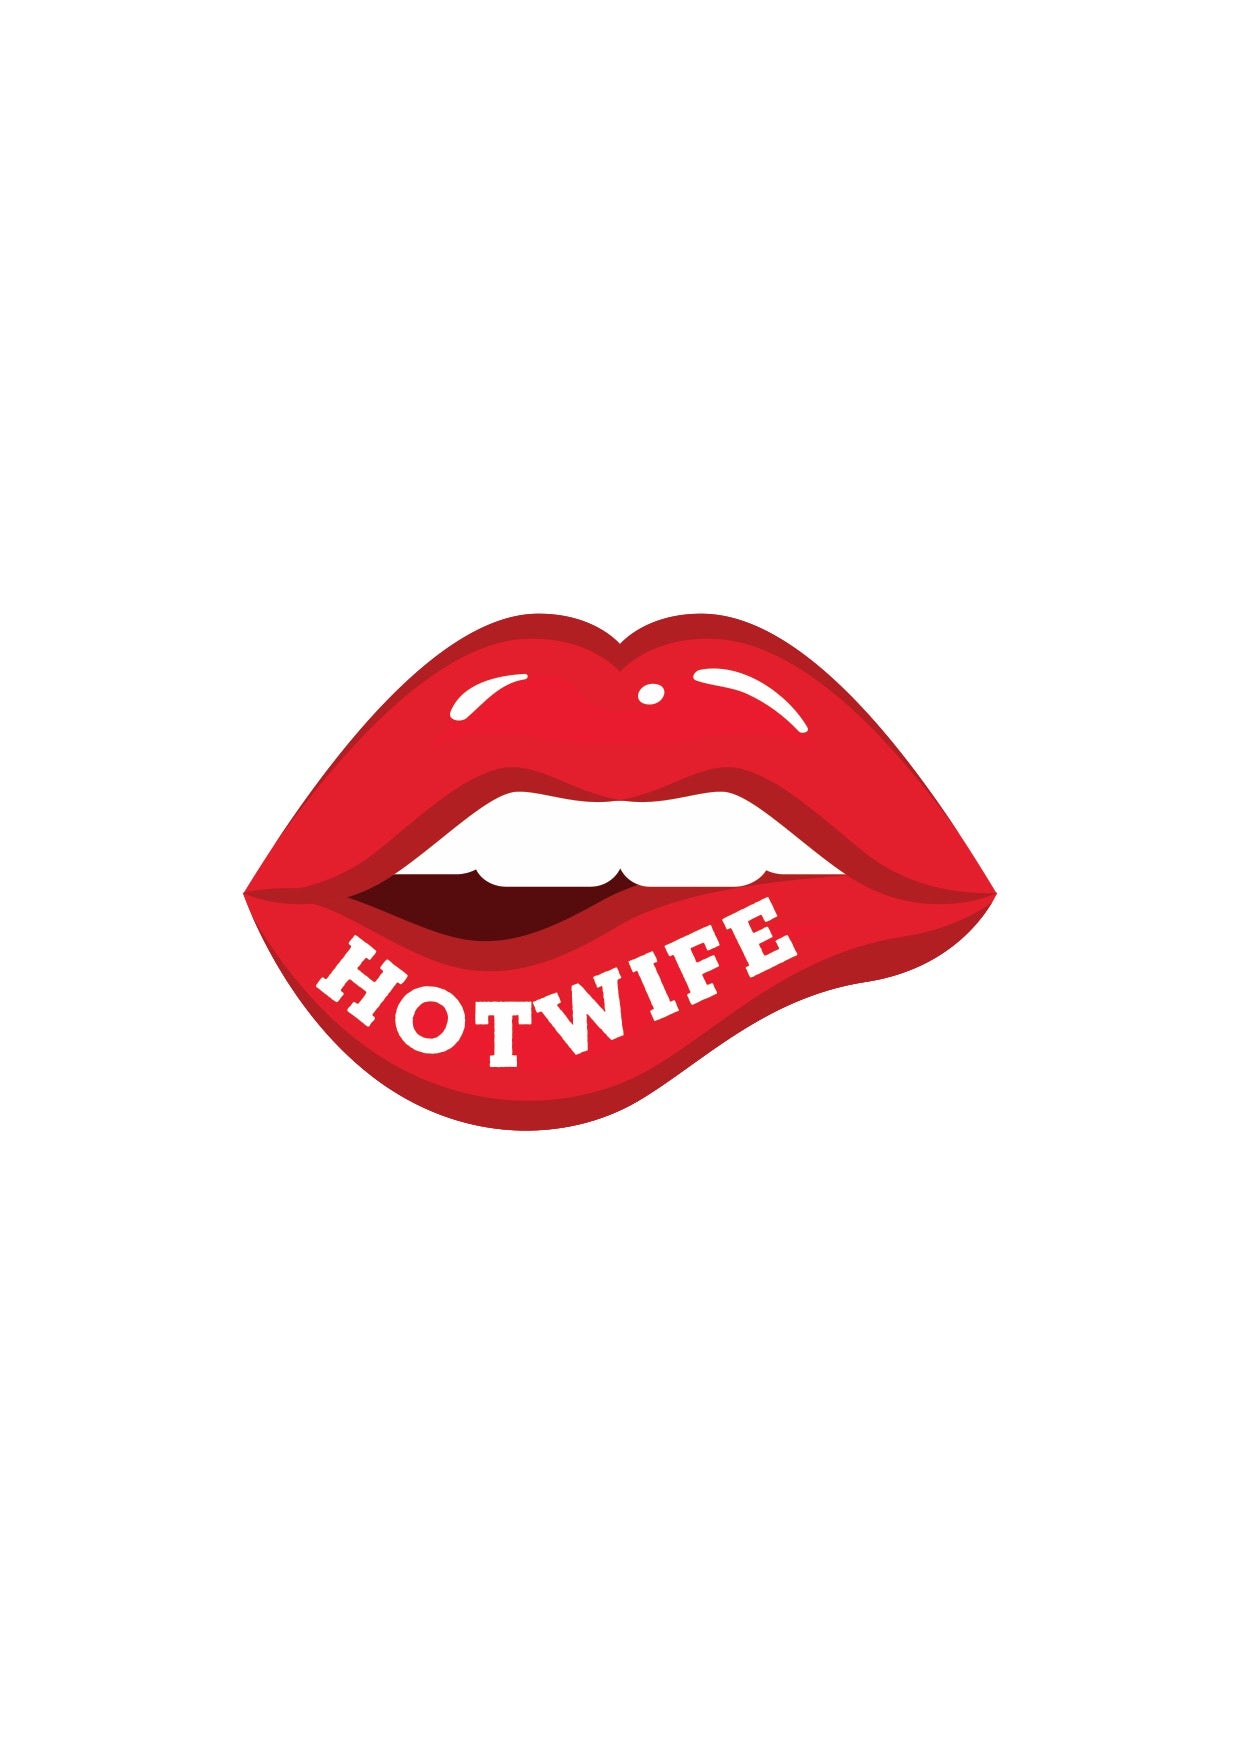 Hotwife Lips image